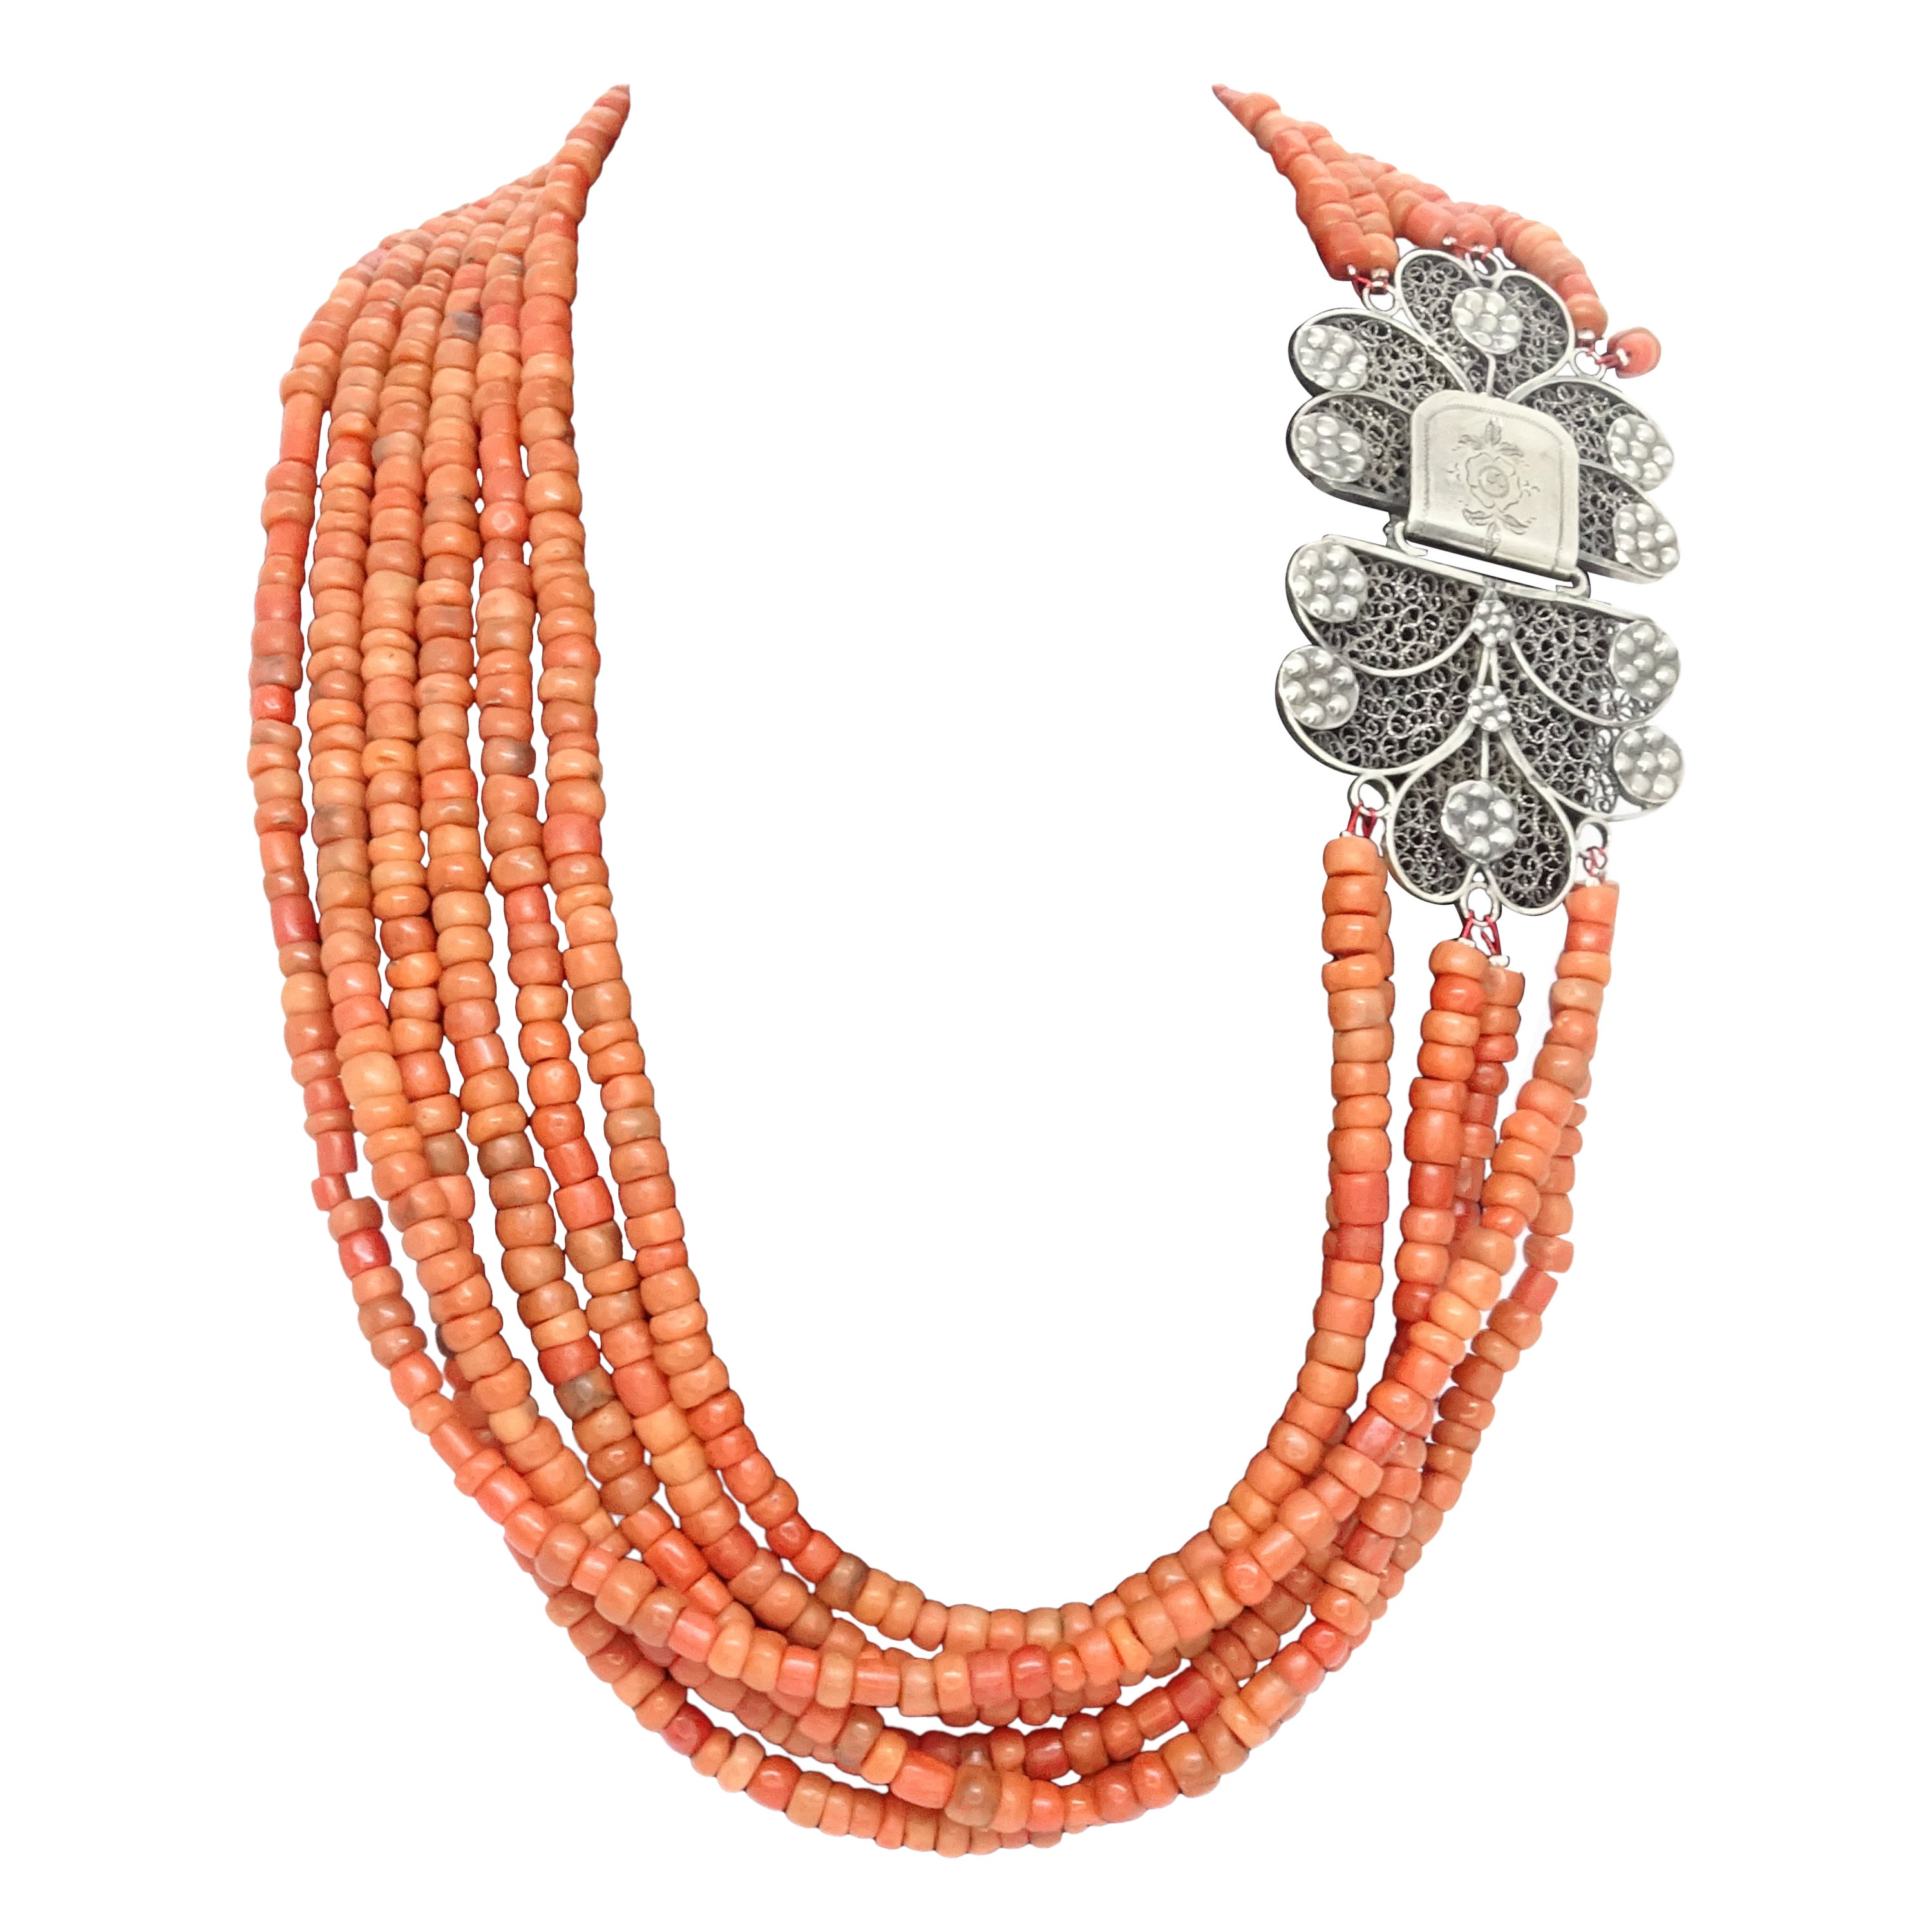 Art Nouveau Red coral necklace, filigree brooch, Dutch silver 835